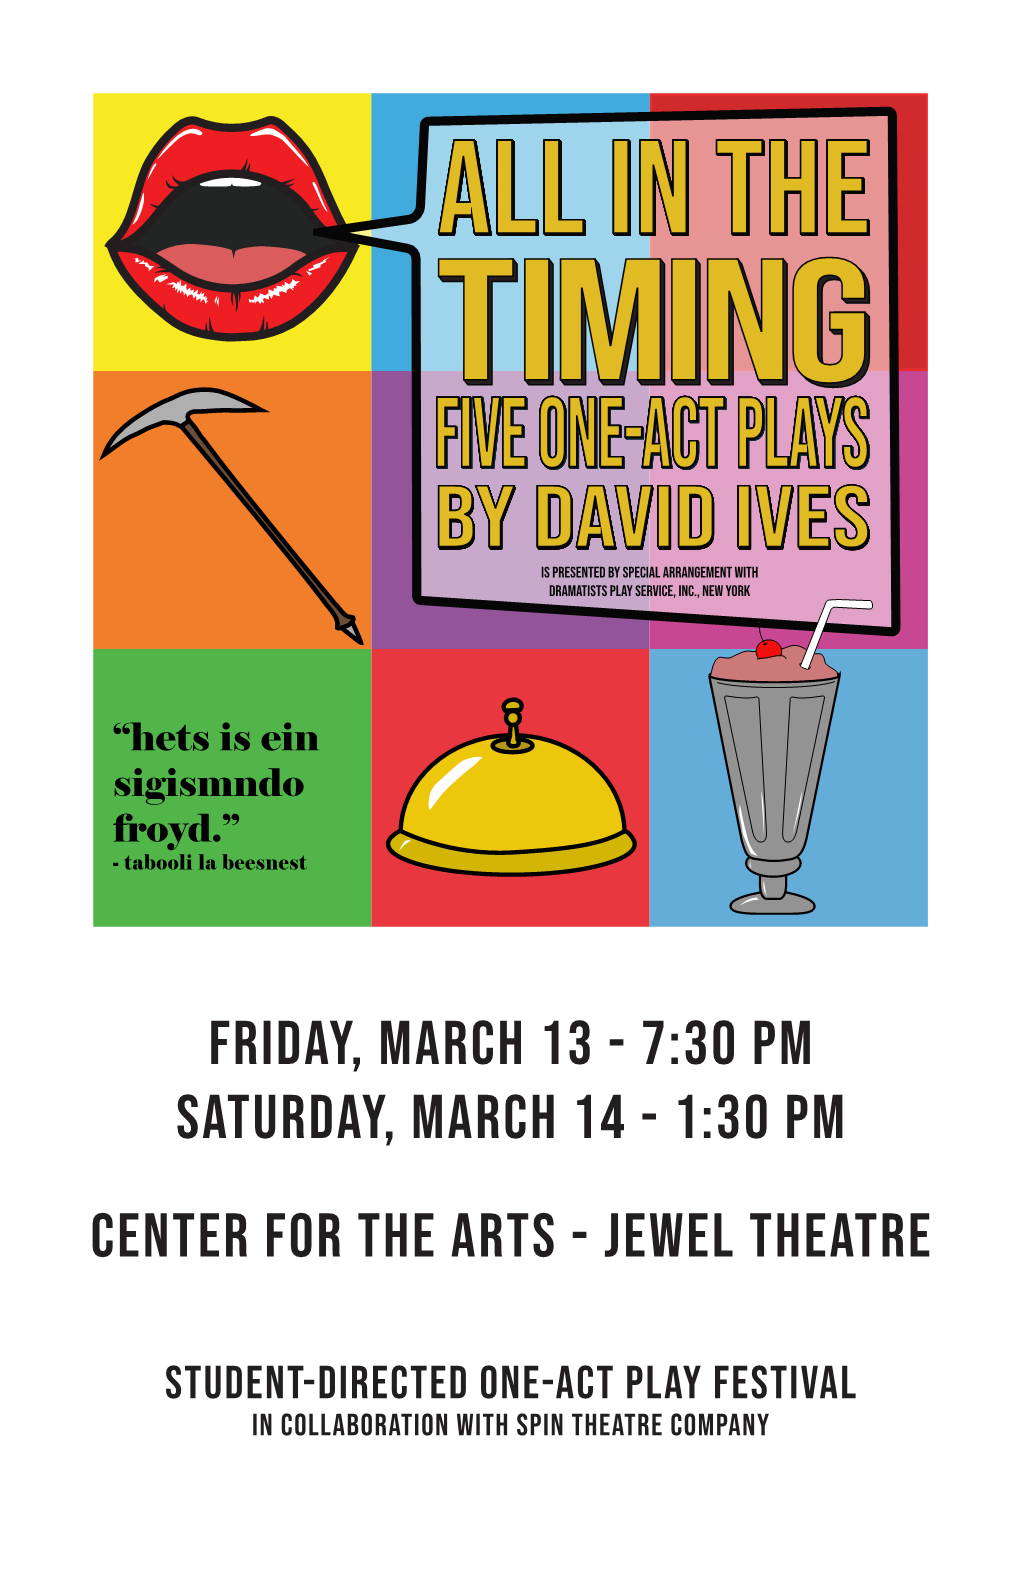 1:30 Pm Center for the Arts - Jewel Theatre